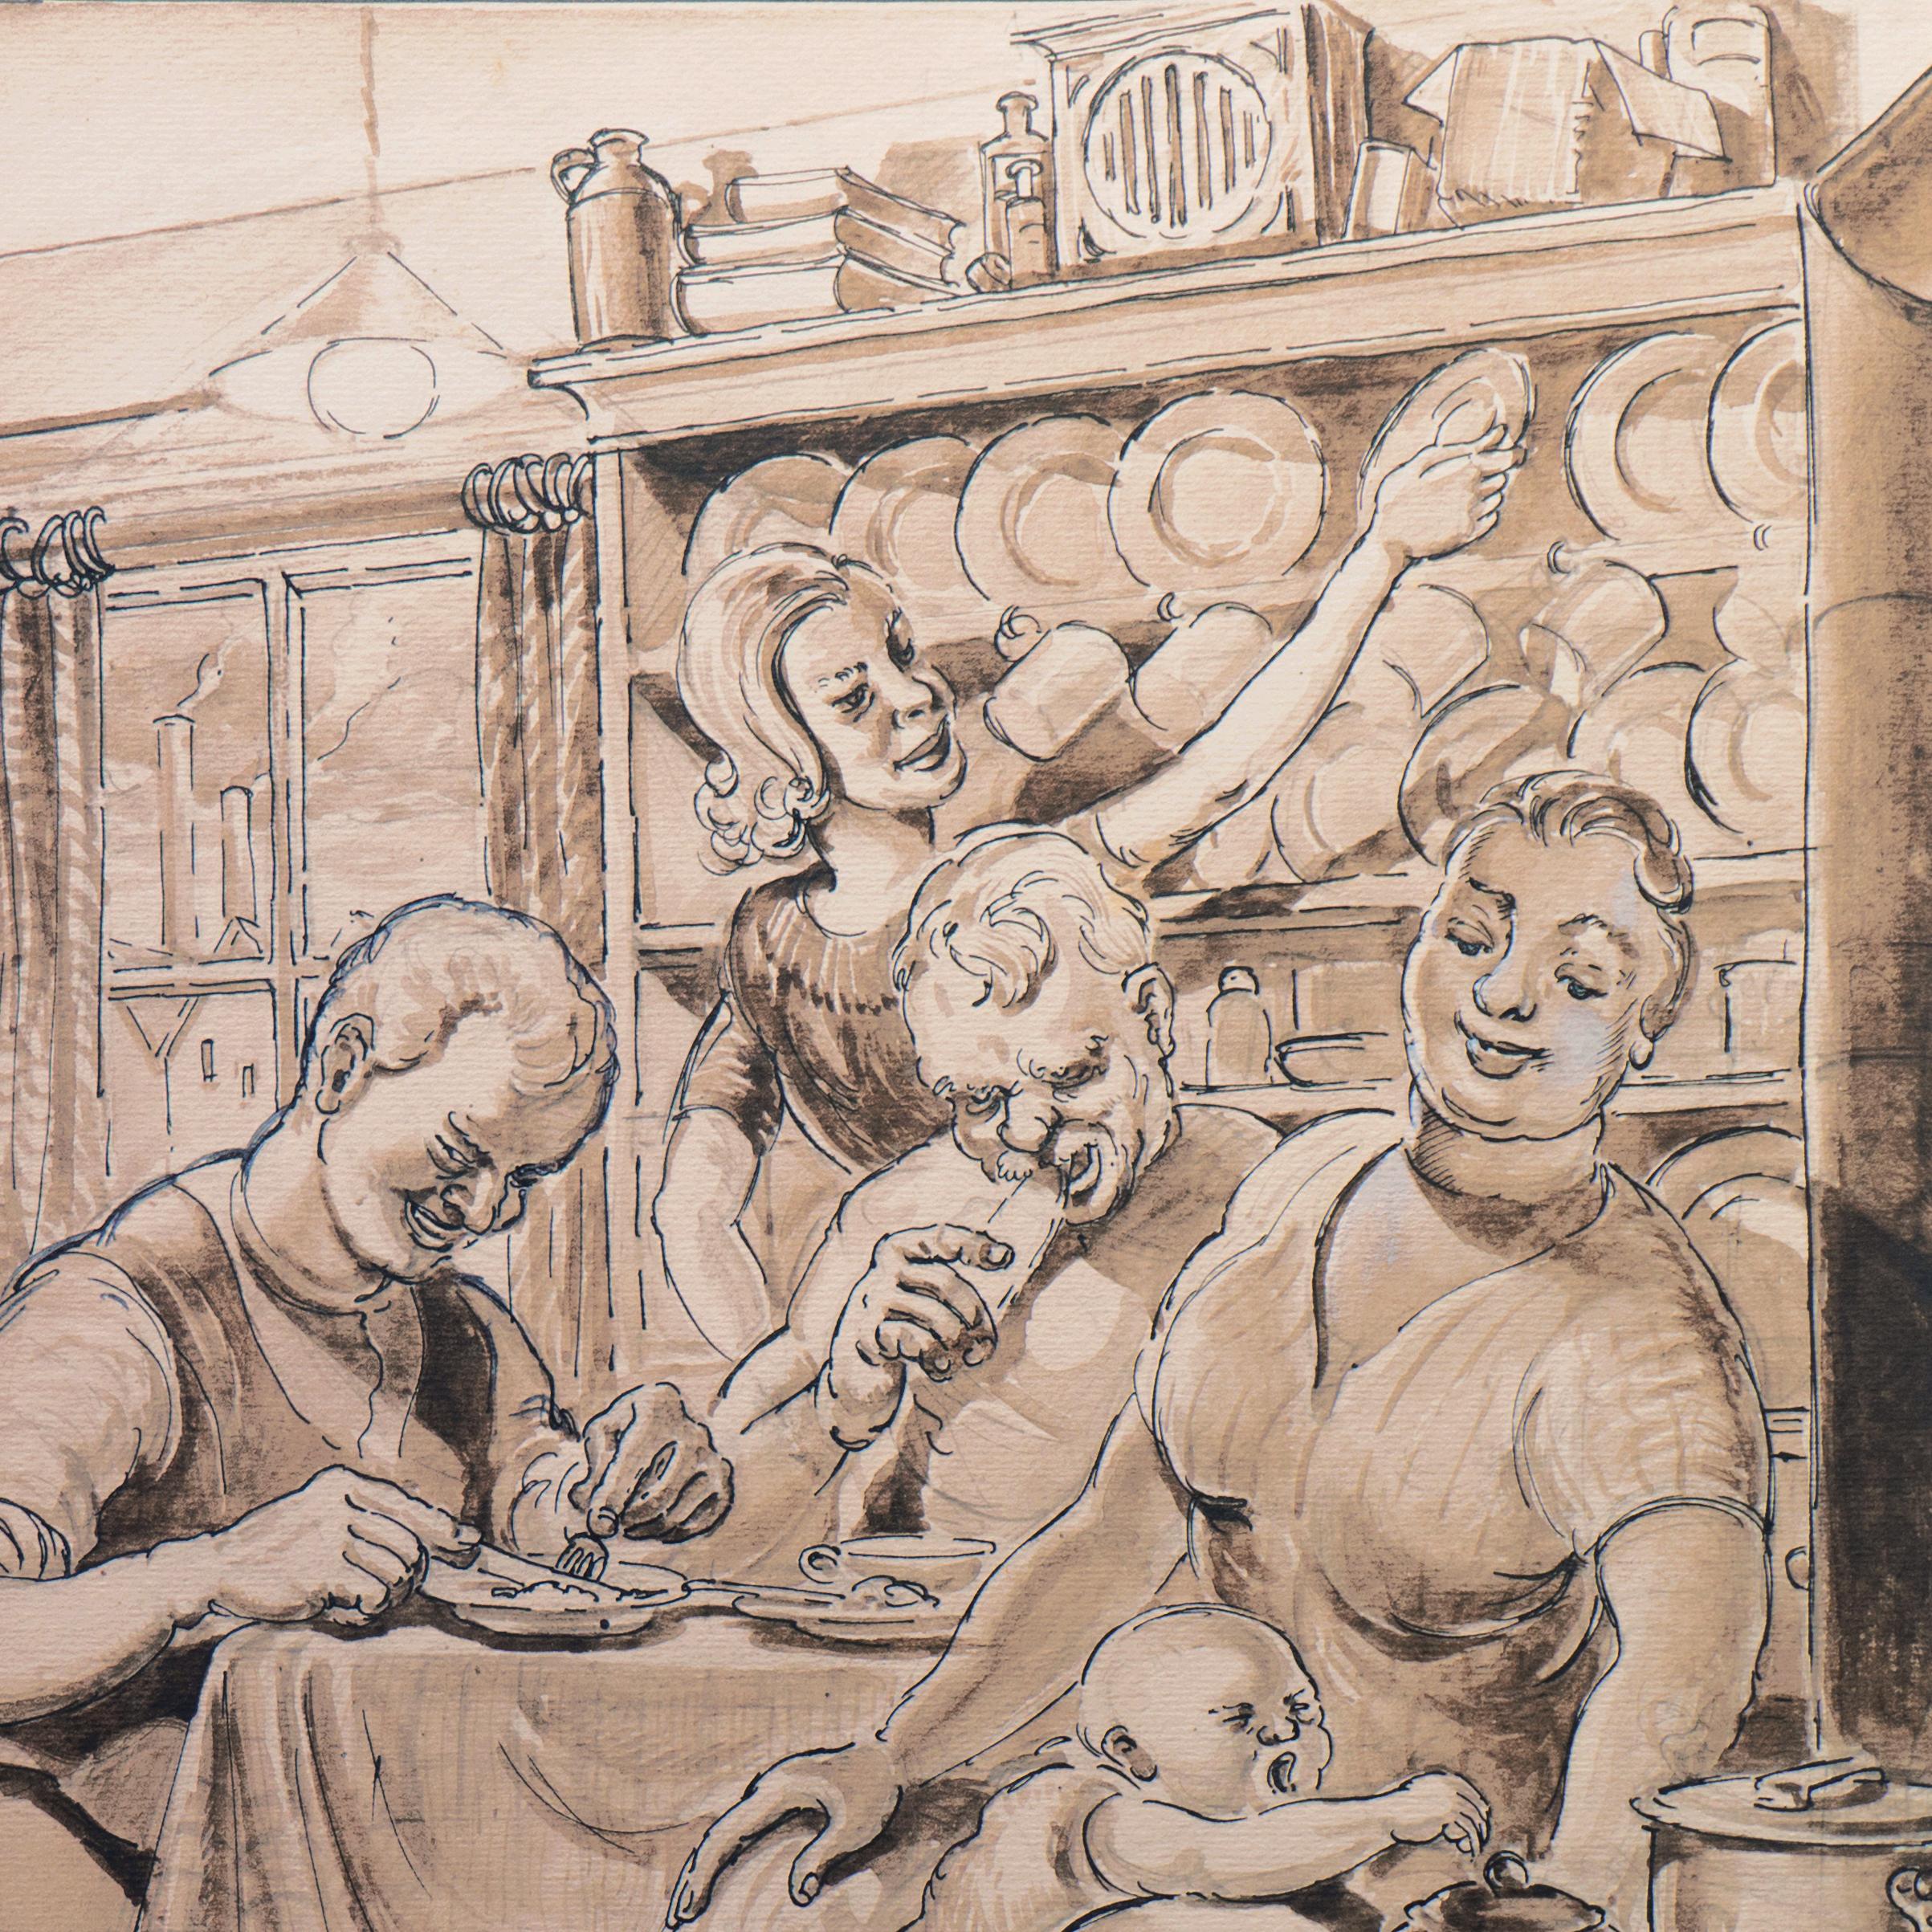 'The Working Class Enjoying a Meal', Satire of Capitalism, Proletarian - Realist Art by Antonio Manganaro